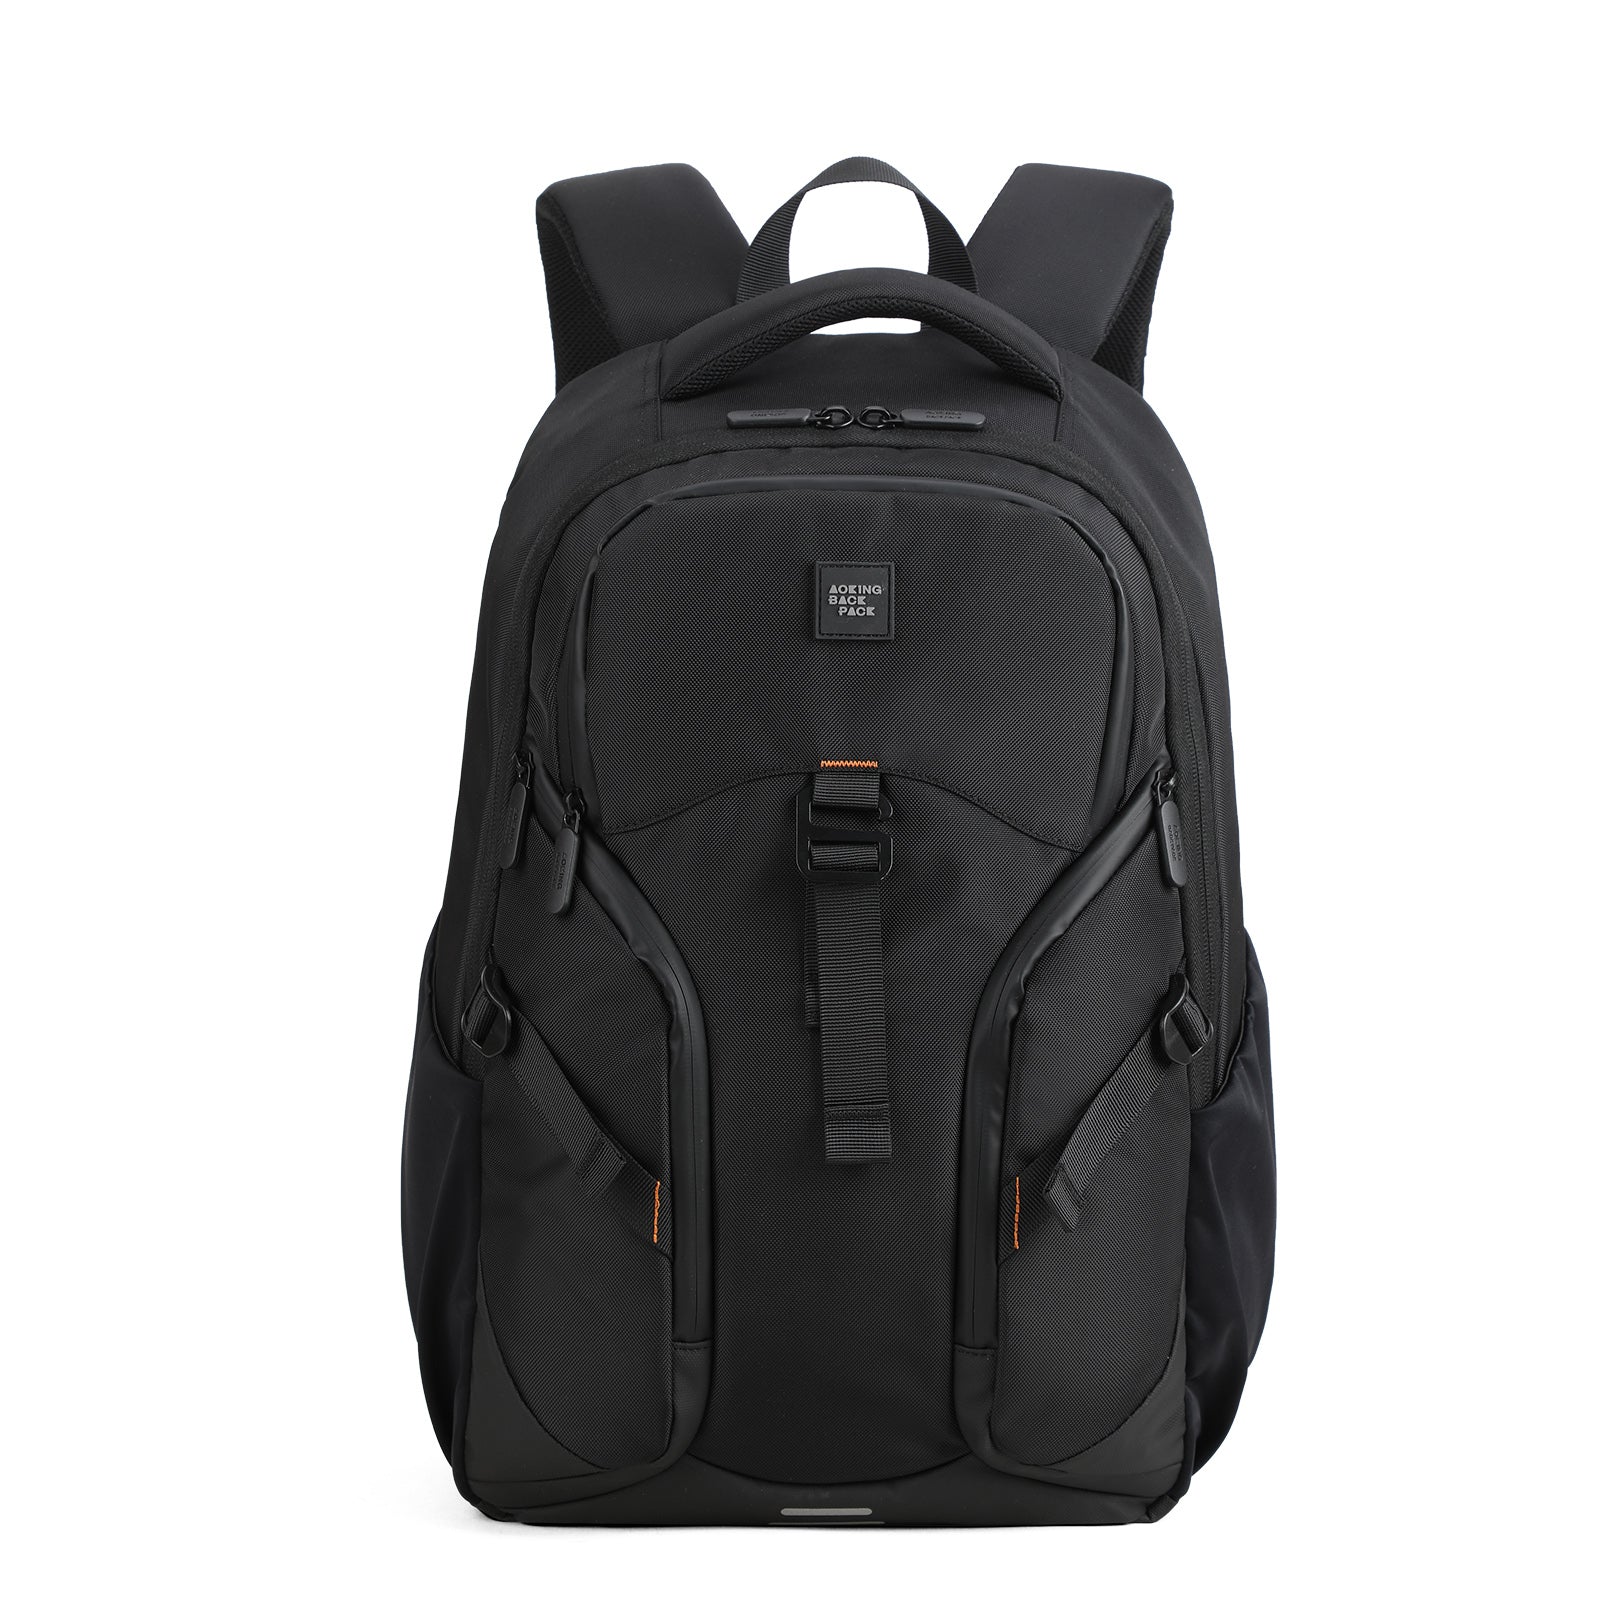 Aoking Travel Backpack XN2686 Black